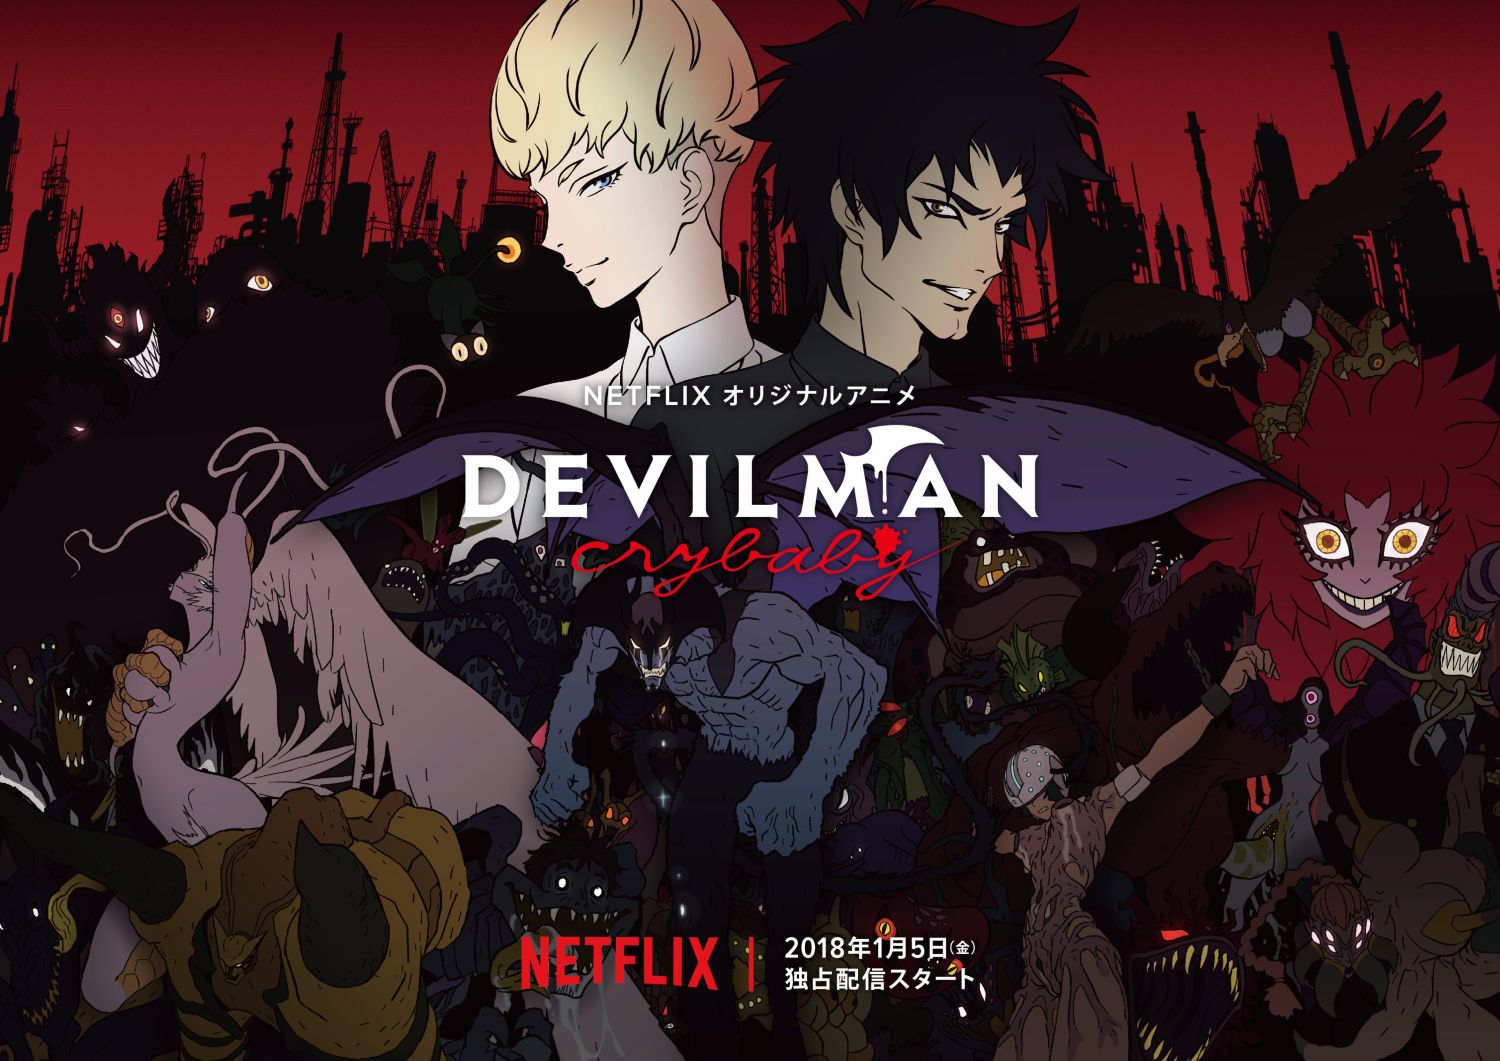 Devilman Crybaby: Potrzebuję cię Netflix s01e01 2018